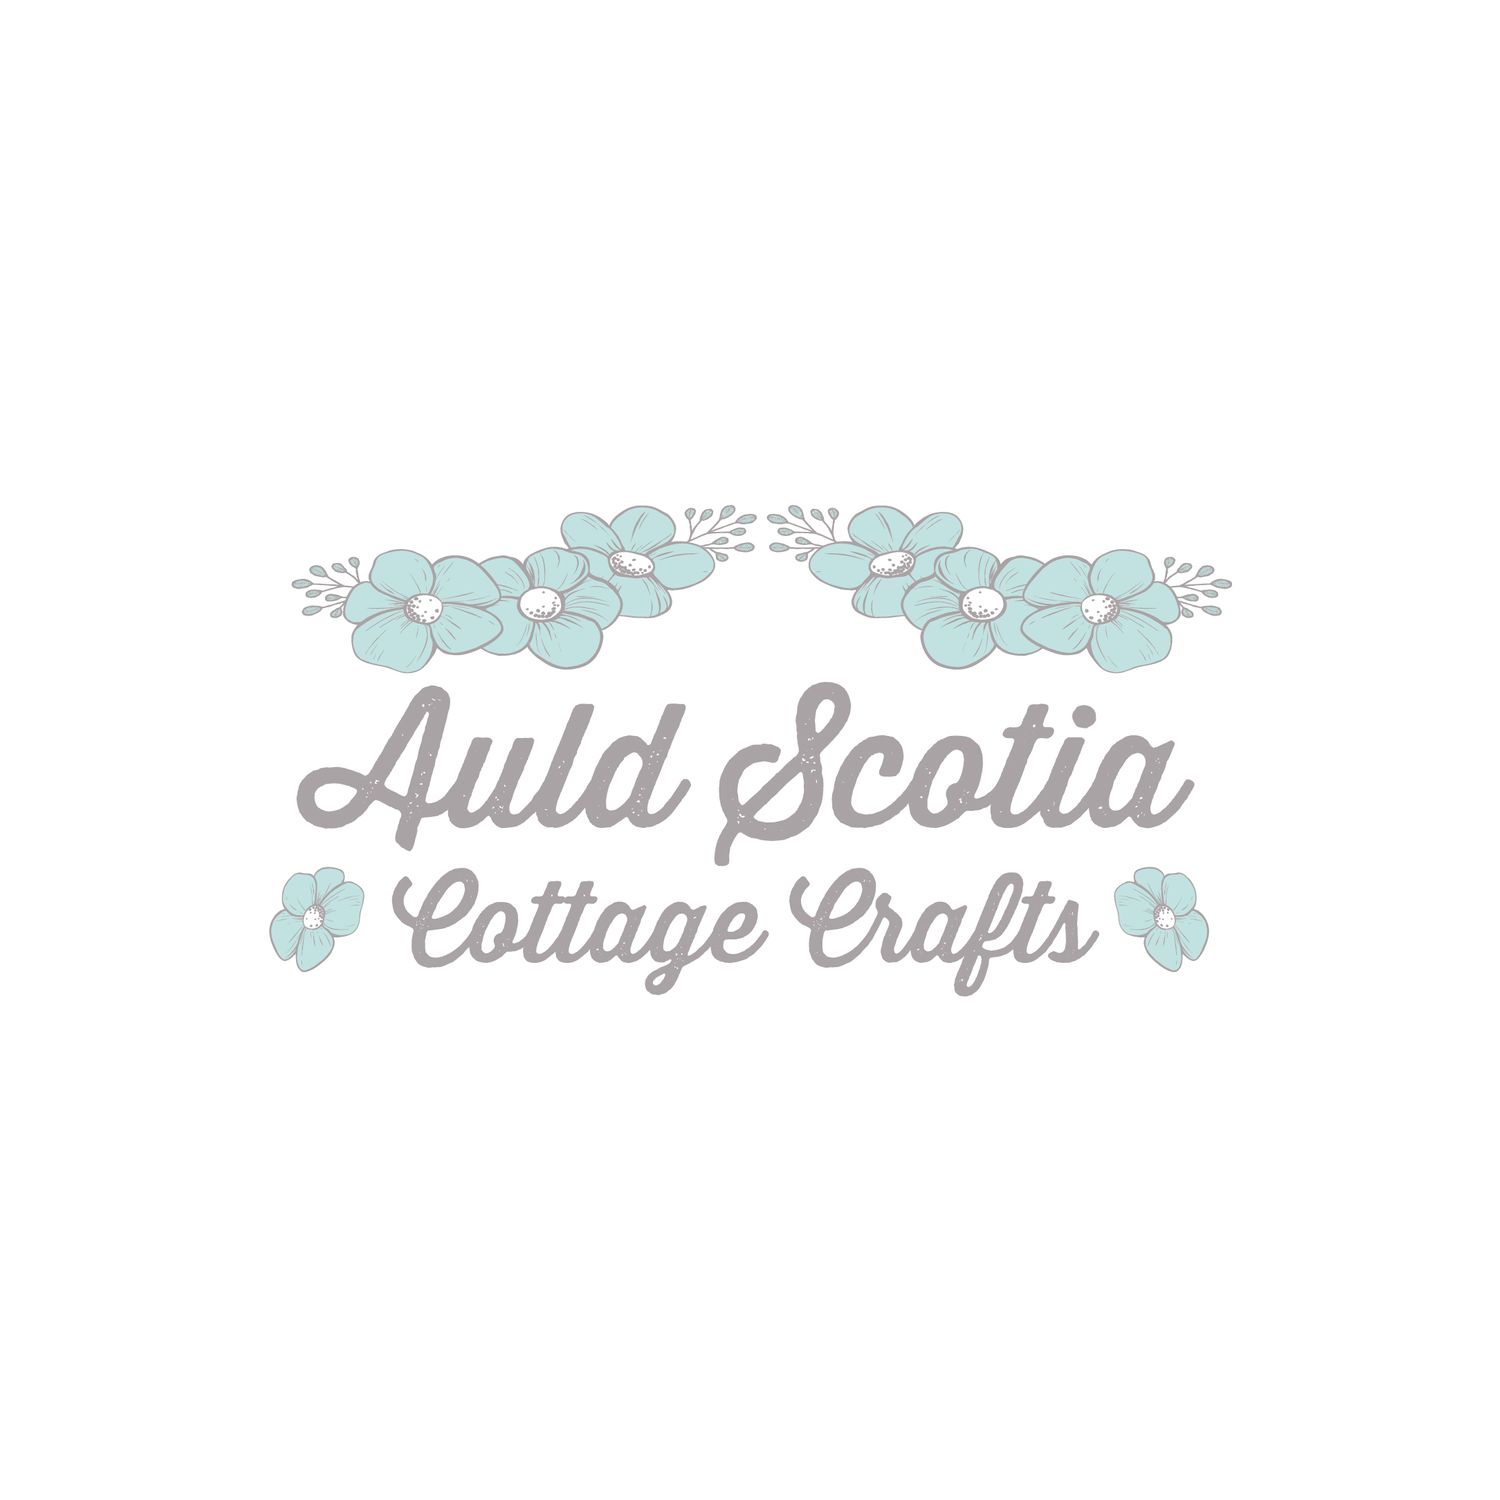 Auld Scotia Cottage Crafts